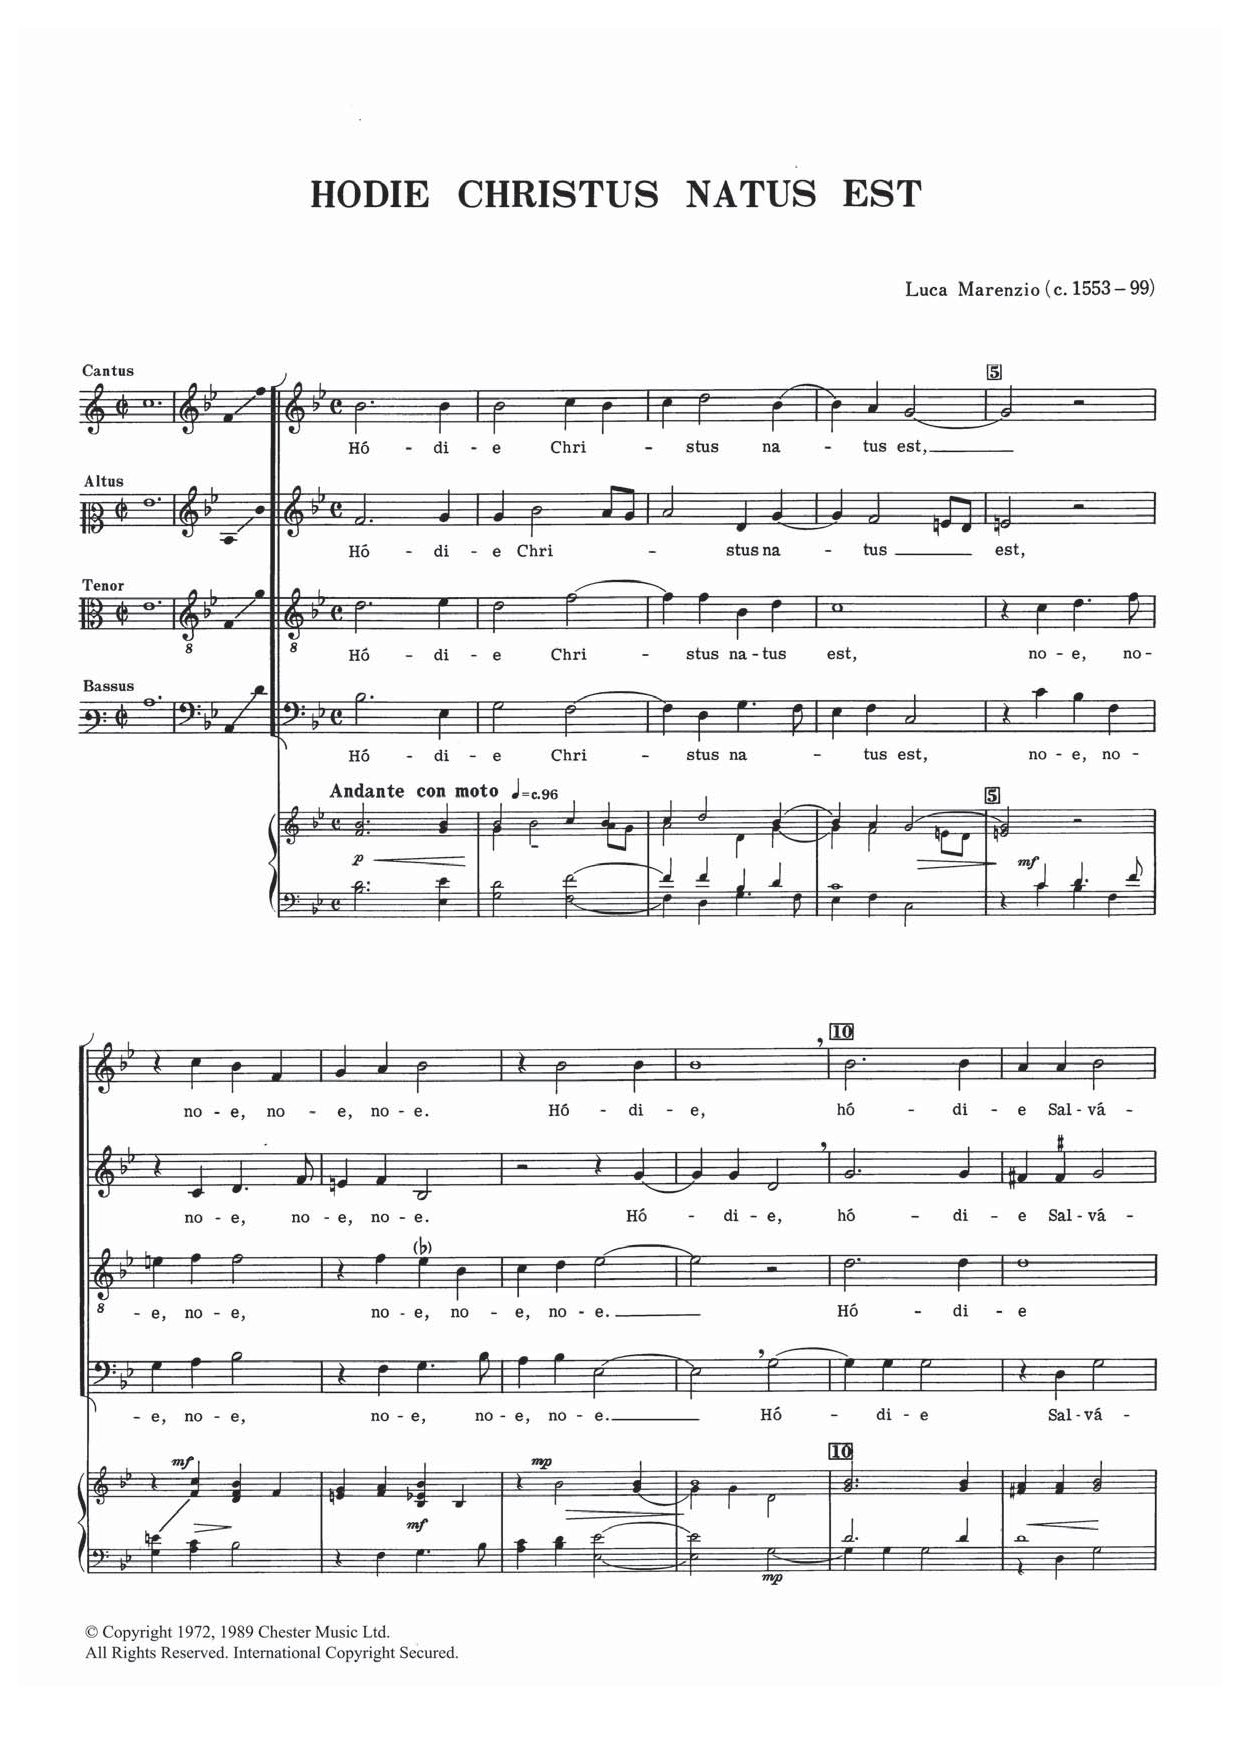 Luca Marenzio Hodie Christus Natus Est Sheet Music Notes & Chords for SATB - Download or Print PDF